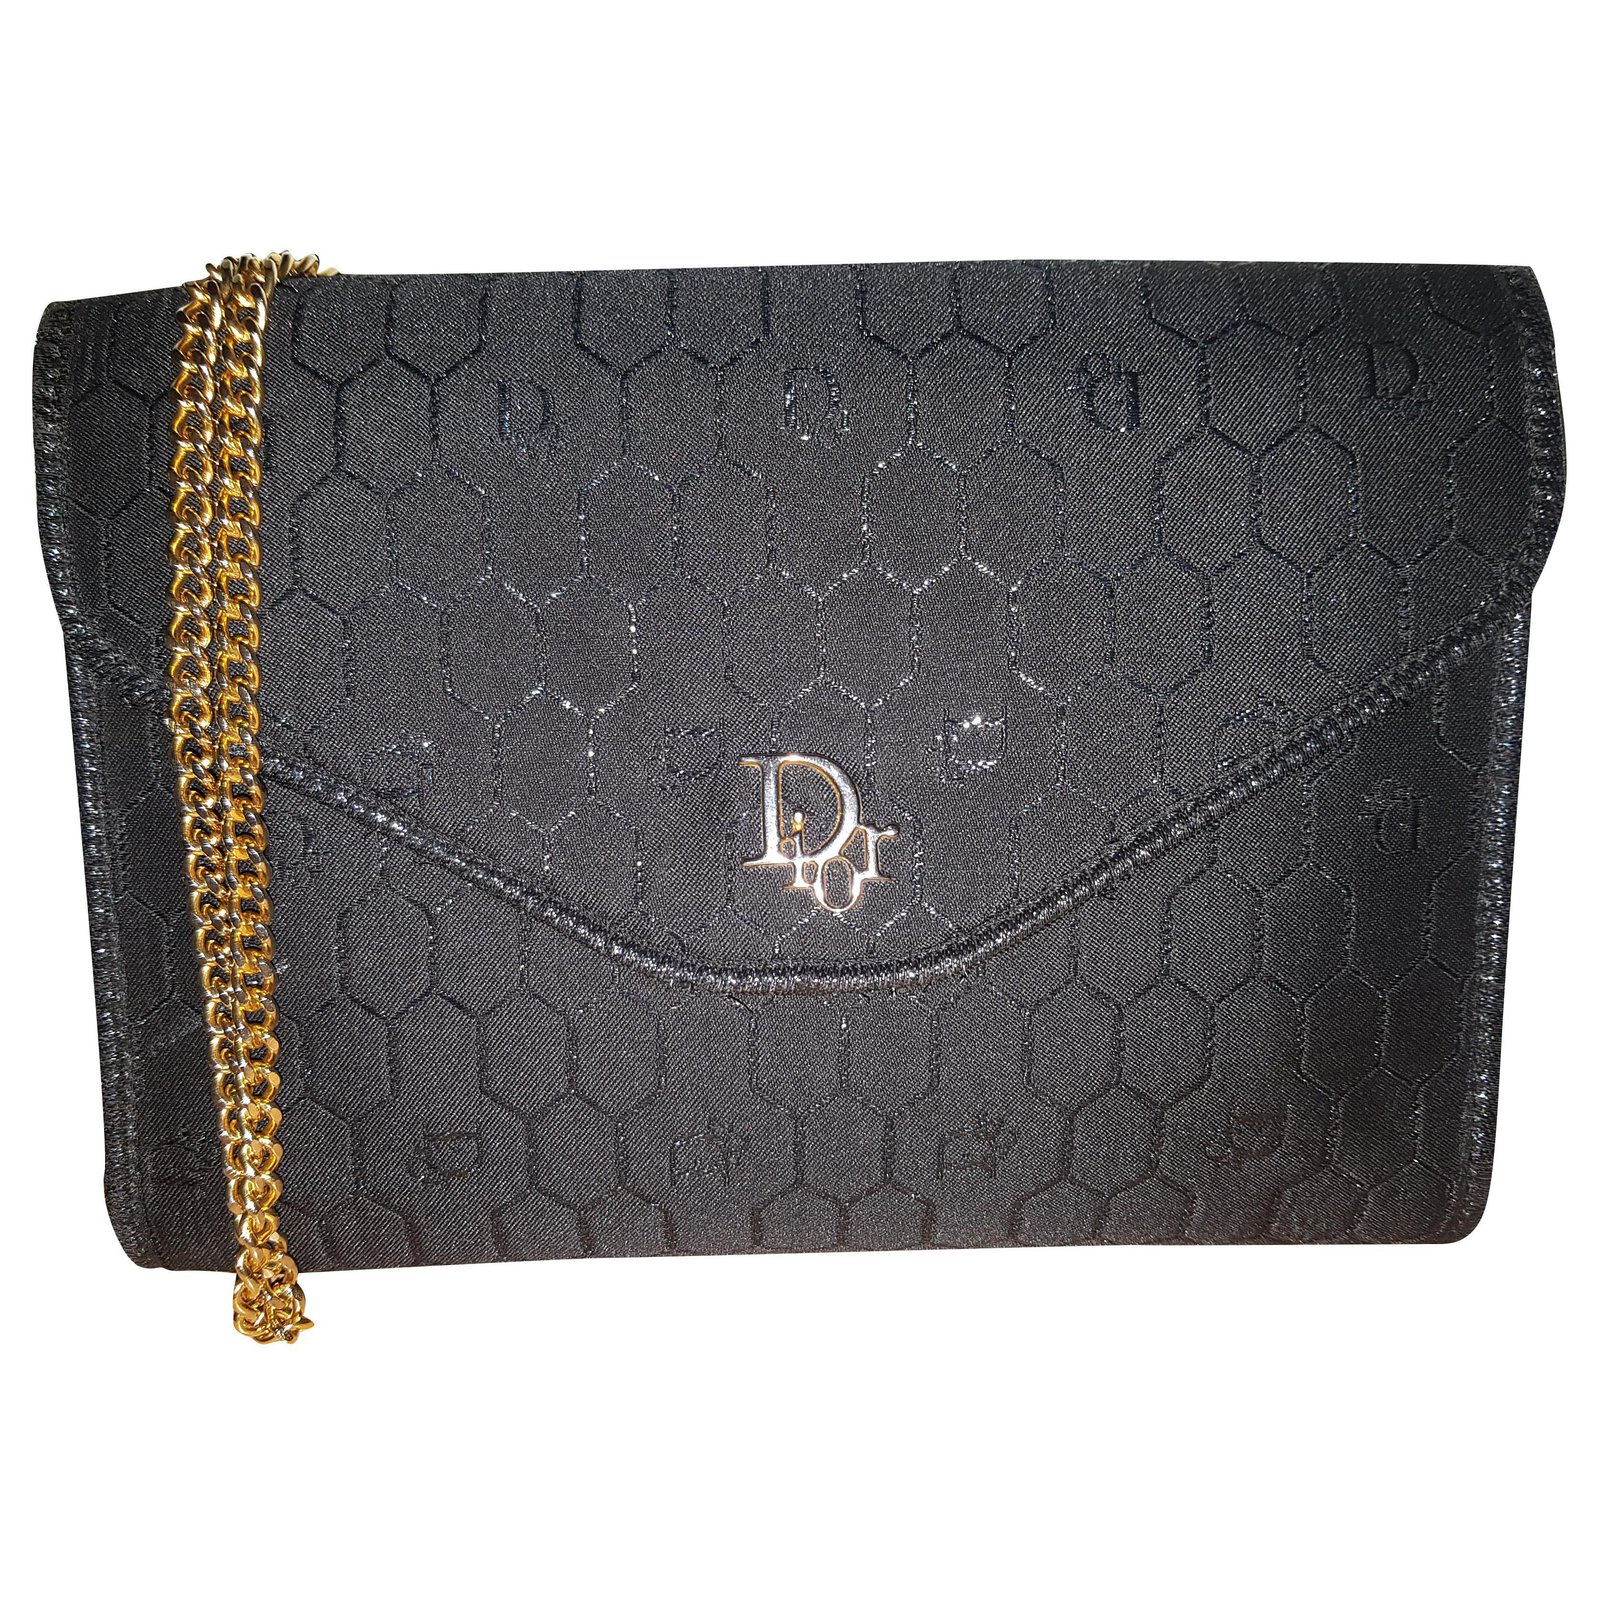 A4 Zipped Pouch Beige and Black Dior Oblique Jacquard | DIOR US